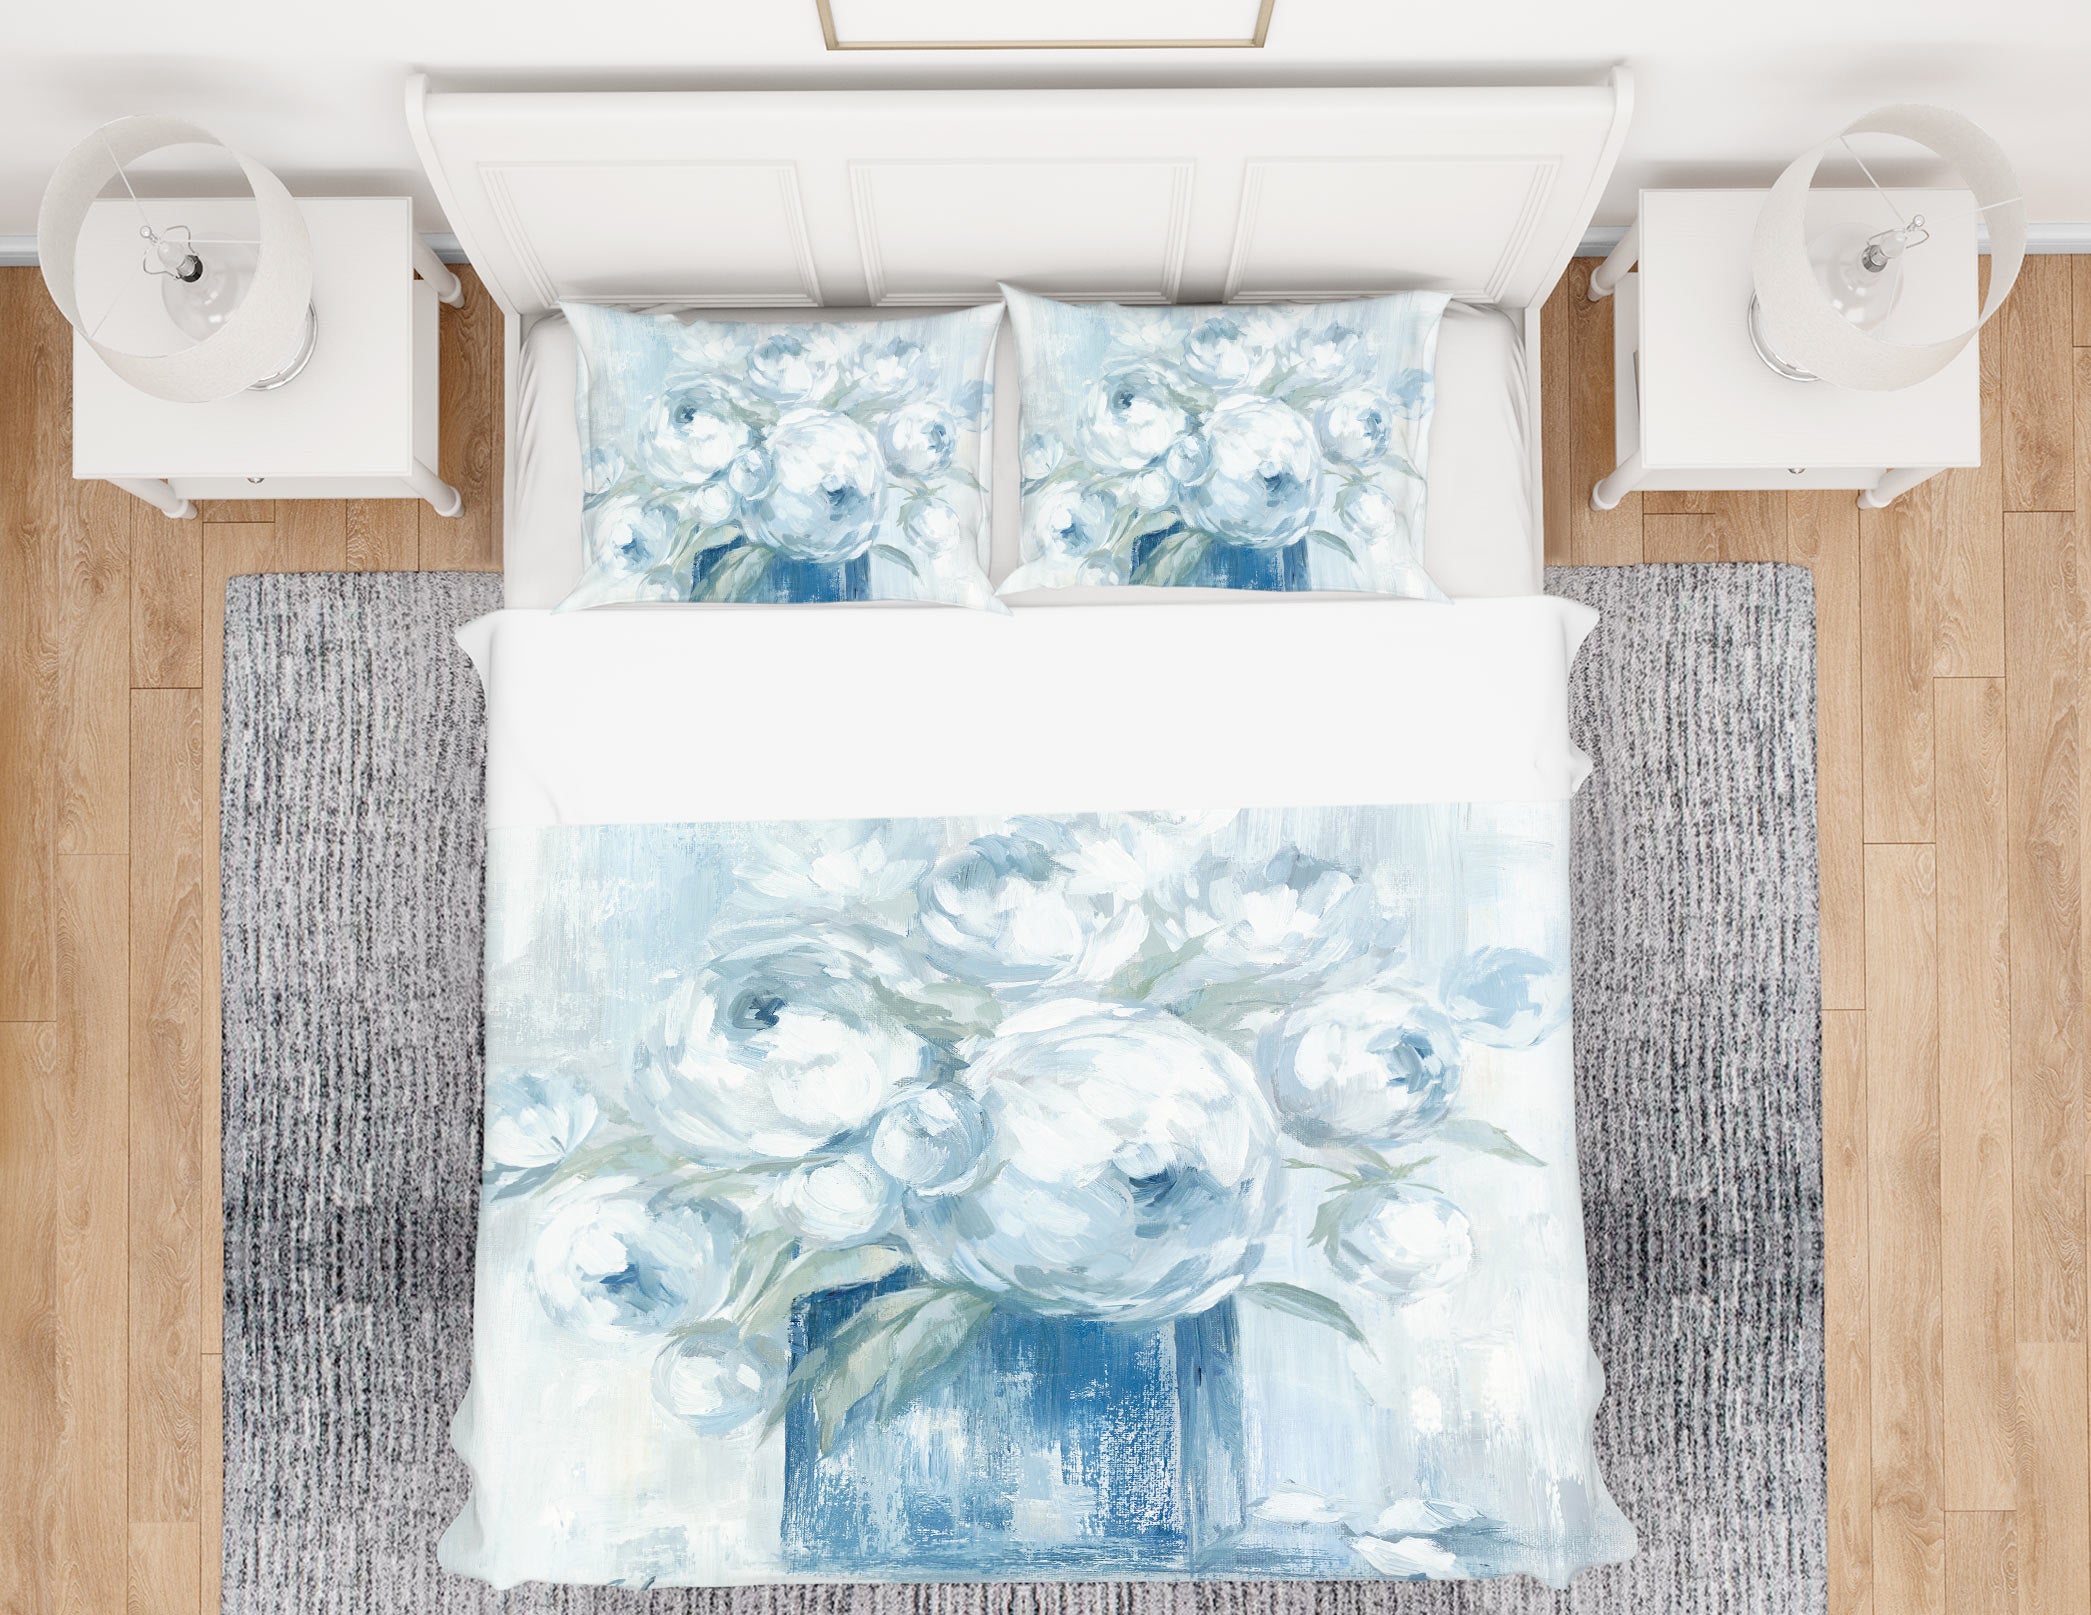 3D White Flower 2162 Debi Coules Bedding Bed Pillowcases Quilt